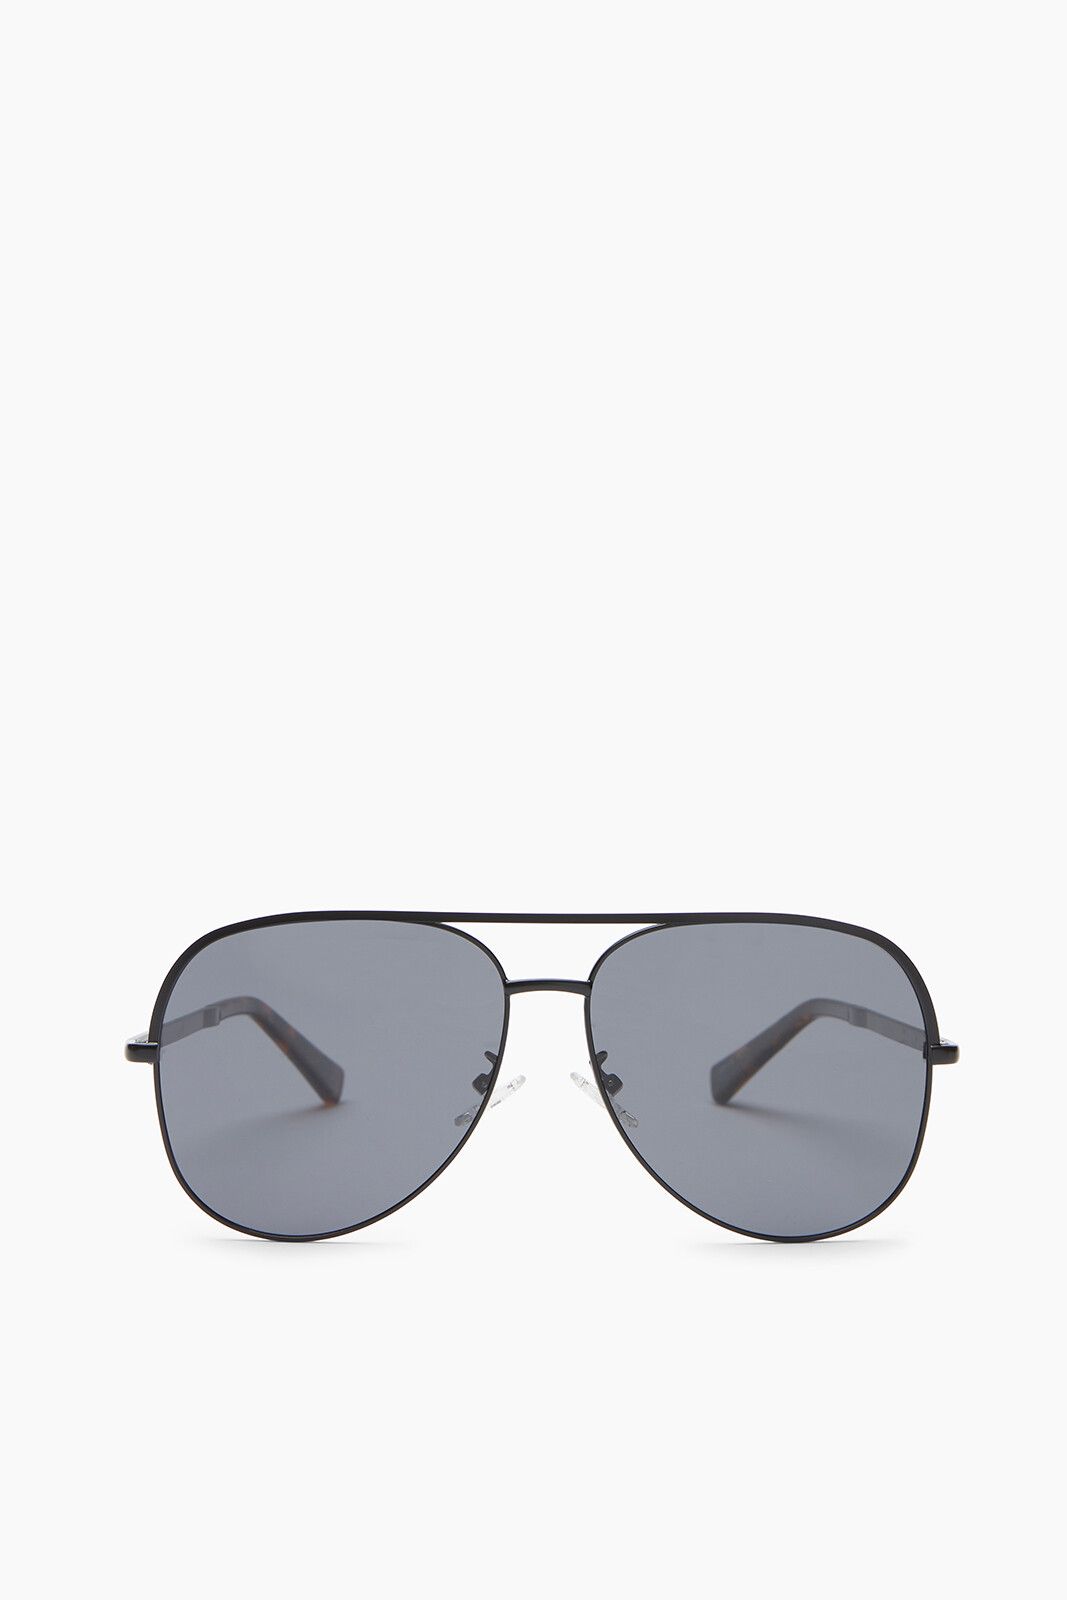 LE SPECS Hey BBY Sunglasses | EVEREVE | Evereve